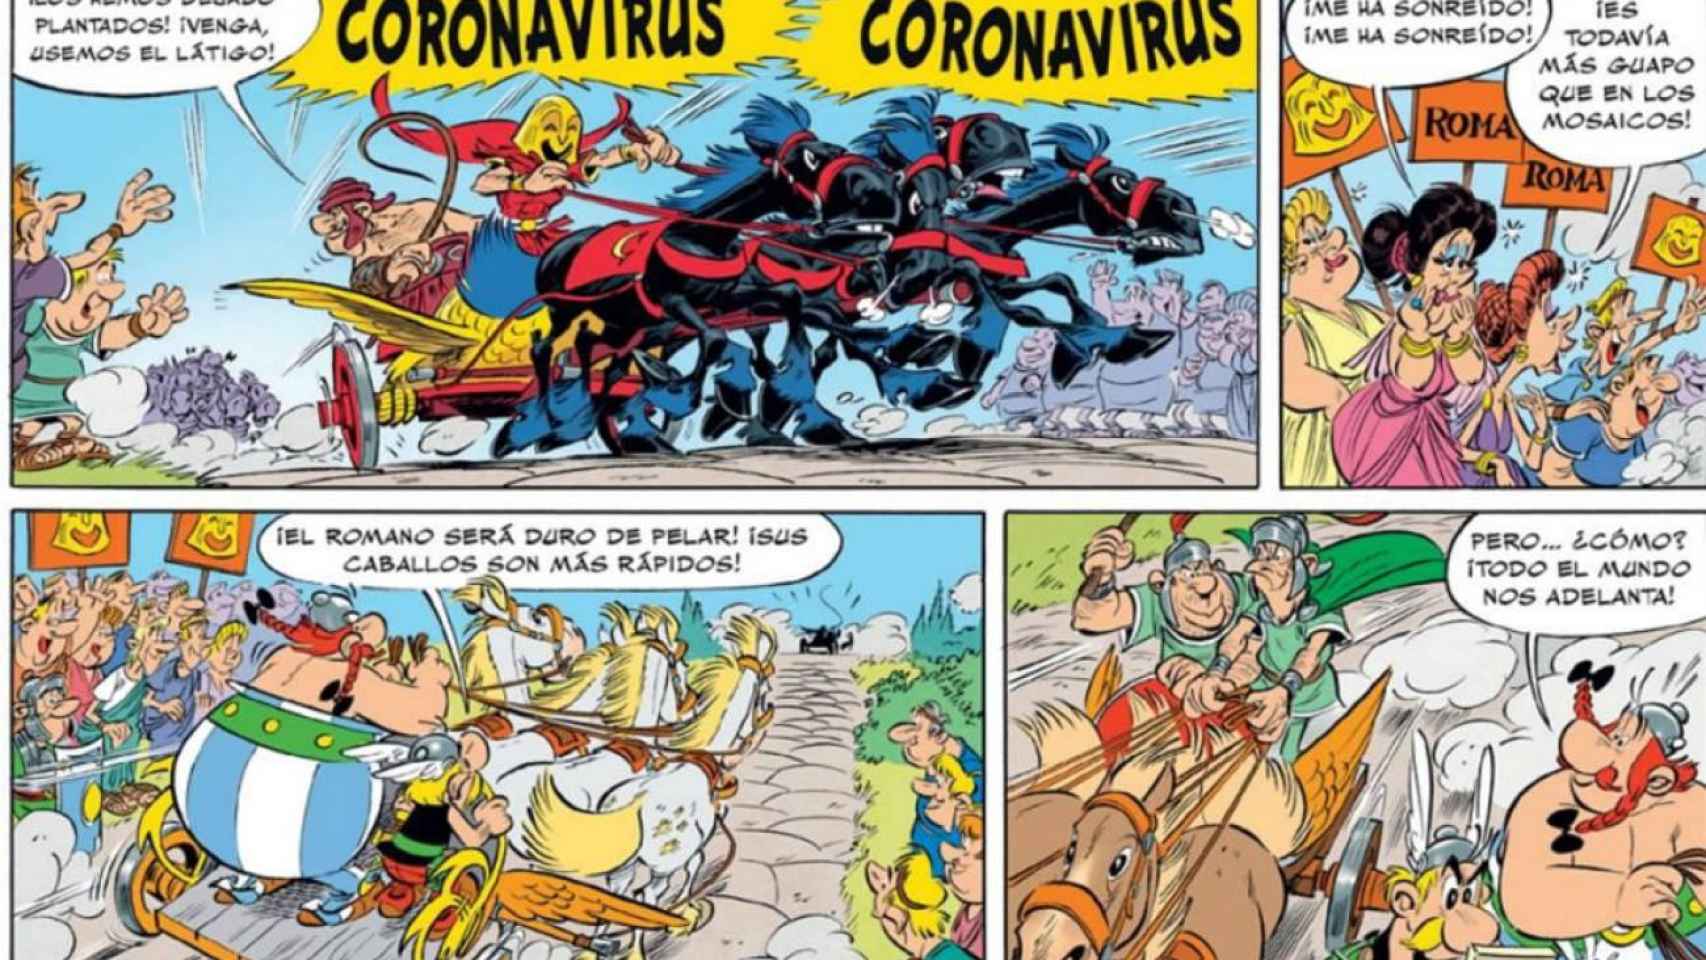 Viñeta del cómic 'Astérix en Italia' en la que aparece el villano 'Coronavirus' / TWITTER